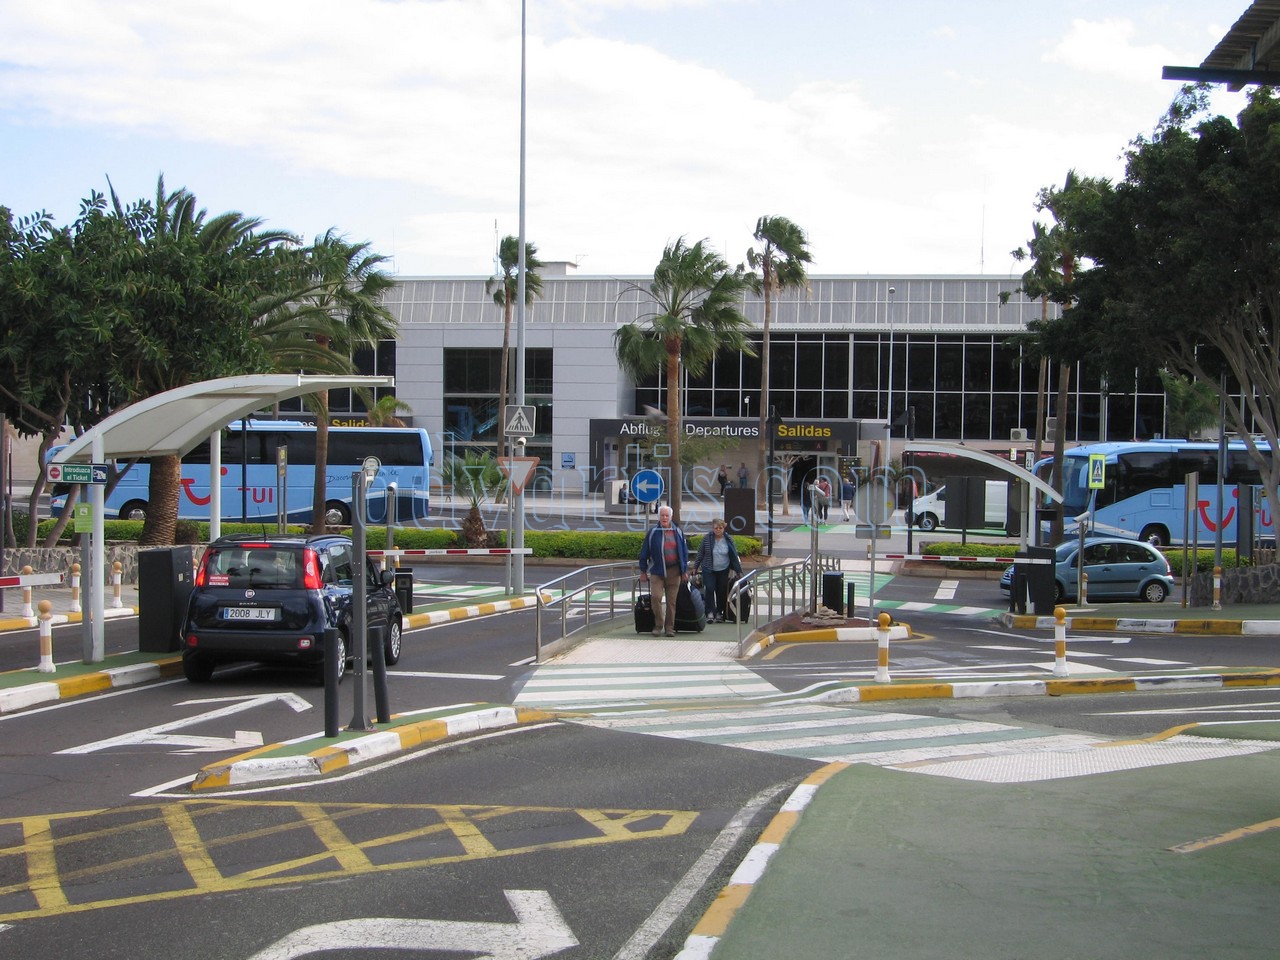 Car hire Tenerife airport south